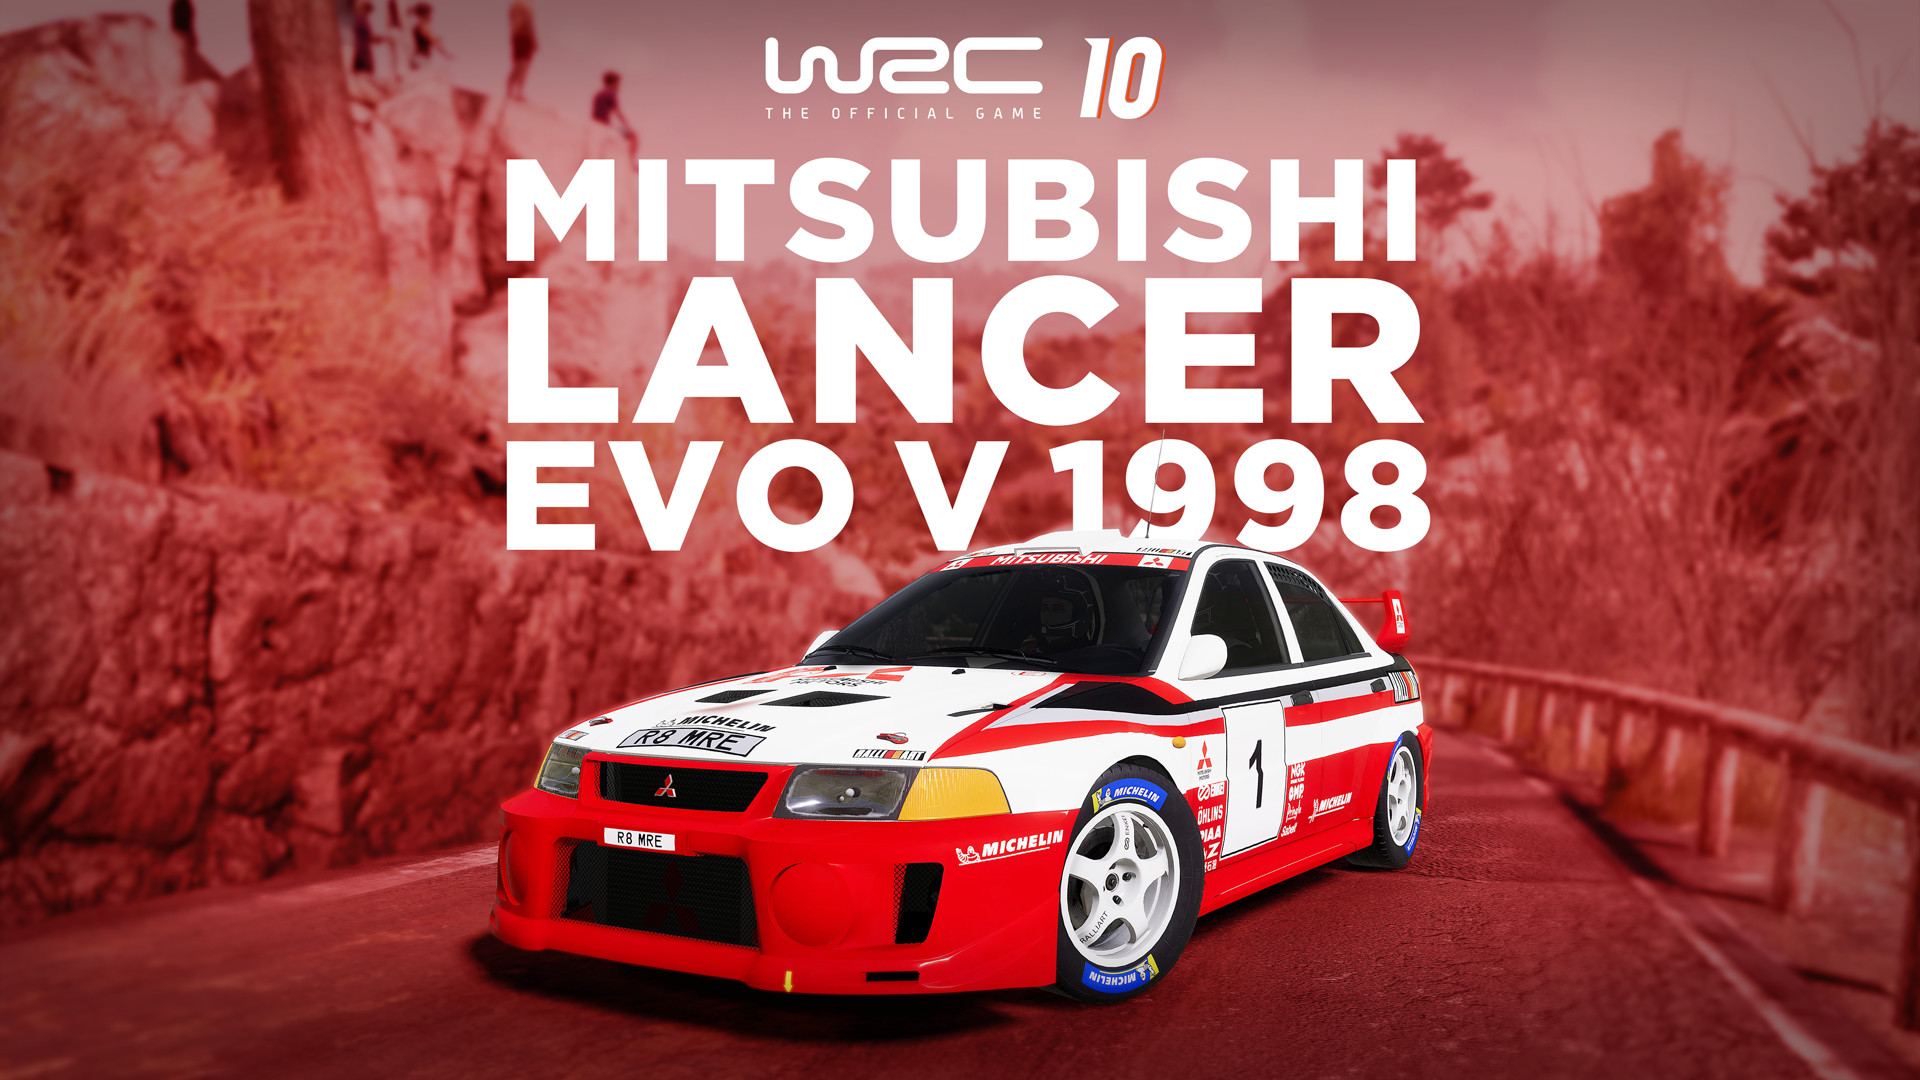 WRC 10 - Mitsubishi Lancer Evo V 1998 DLC Steam CD Key 2.69 $